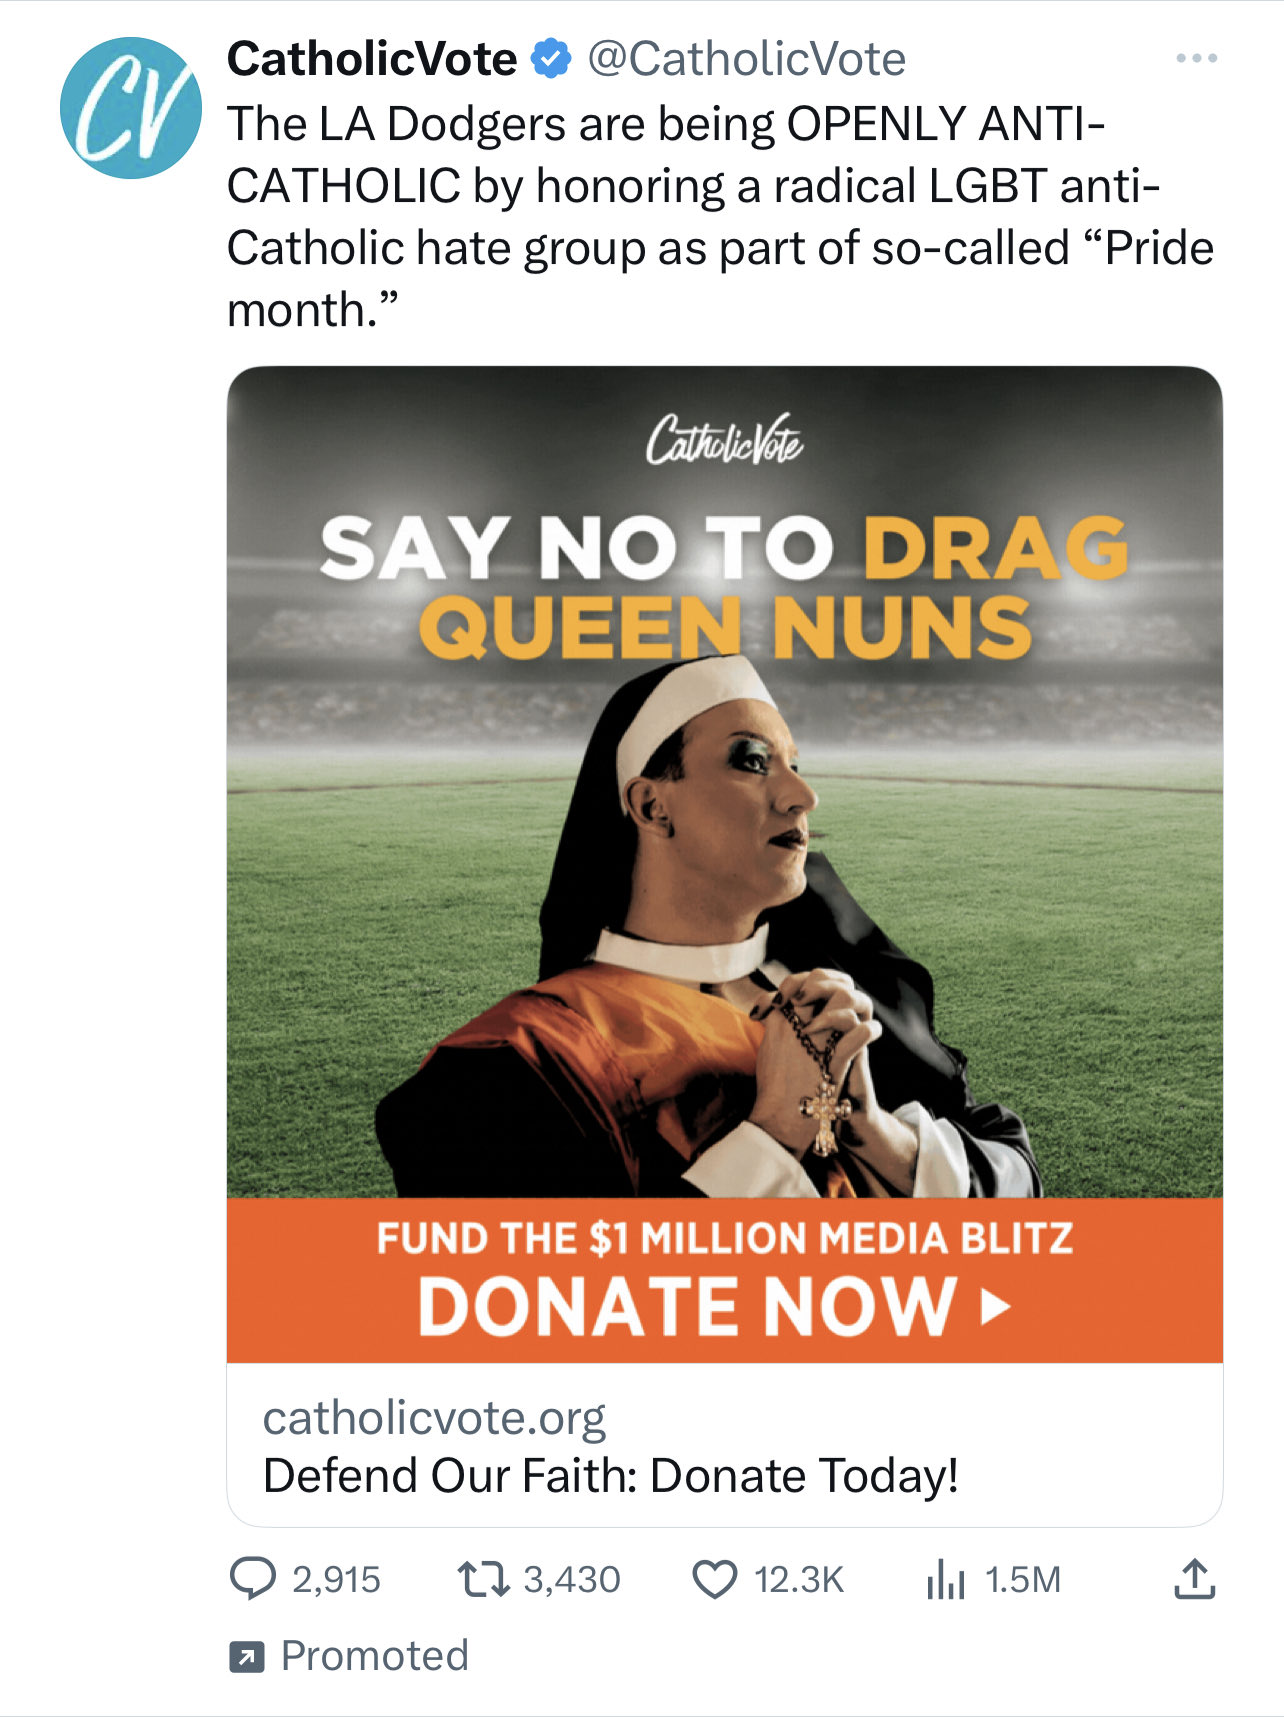 Dodgers Promote Anti-Catholicism